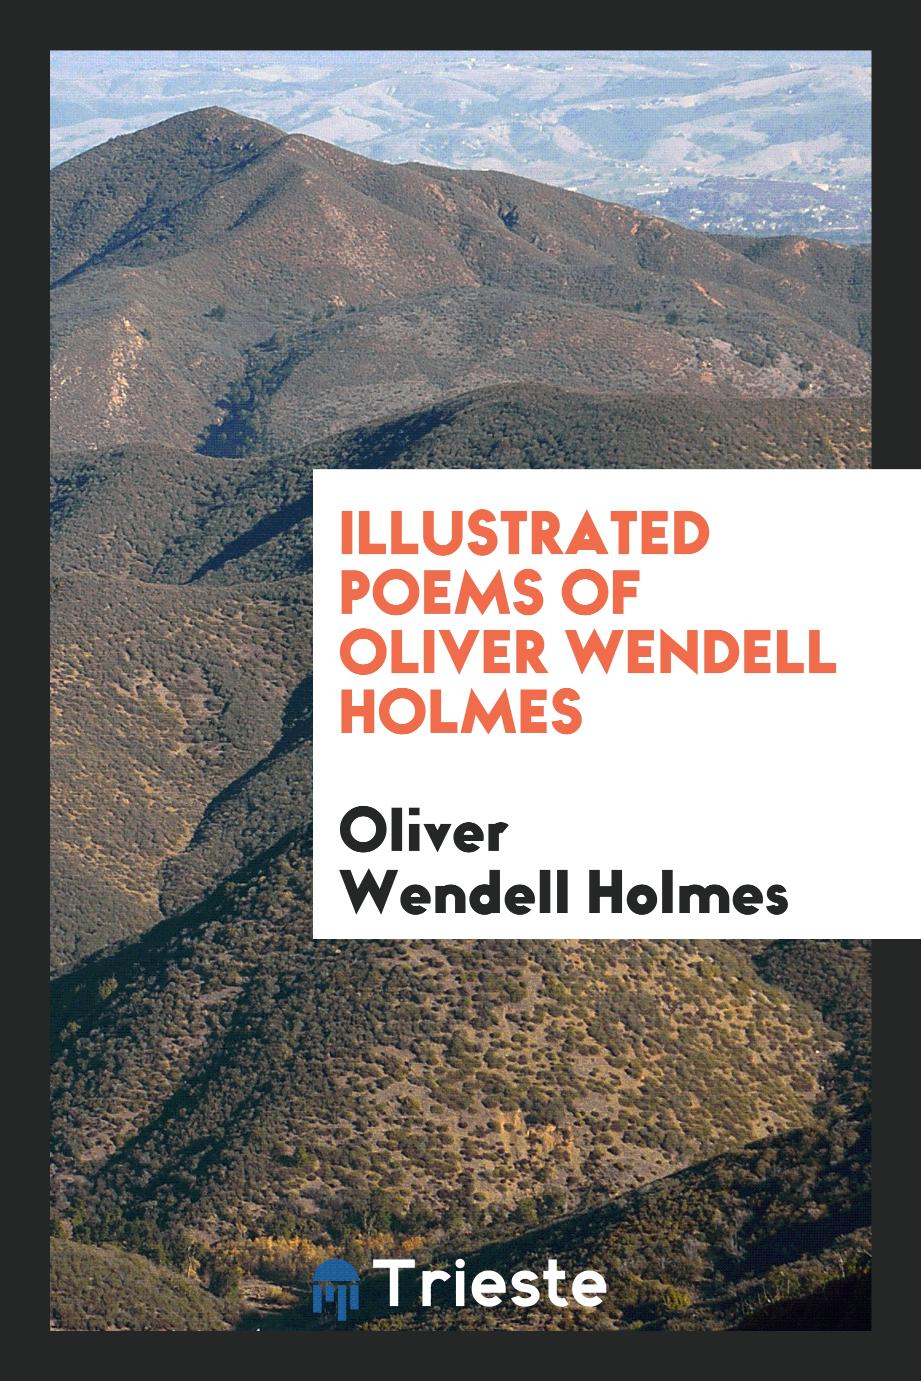 Illustrated poems of Oliver Wendell Holmes